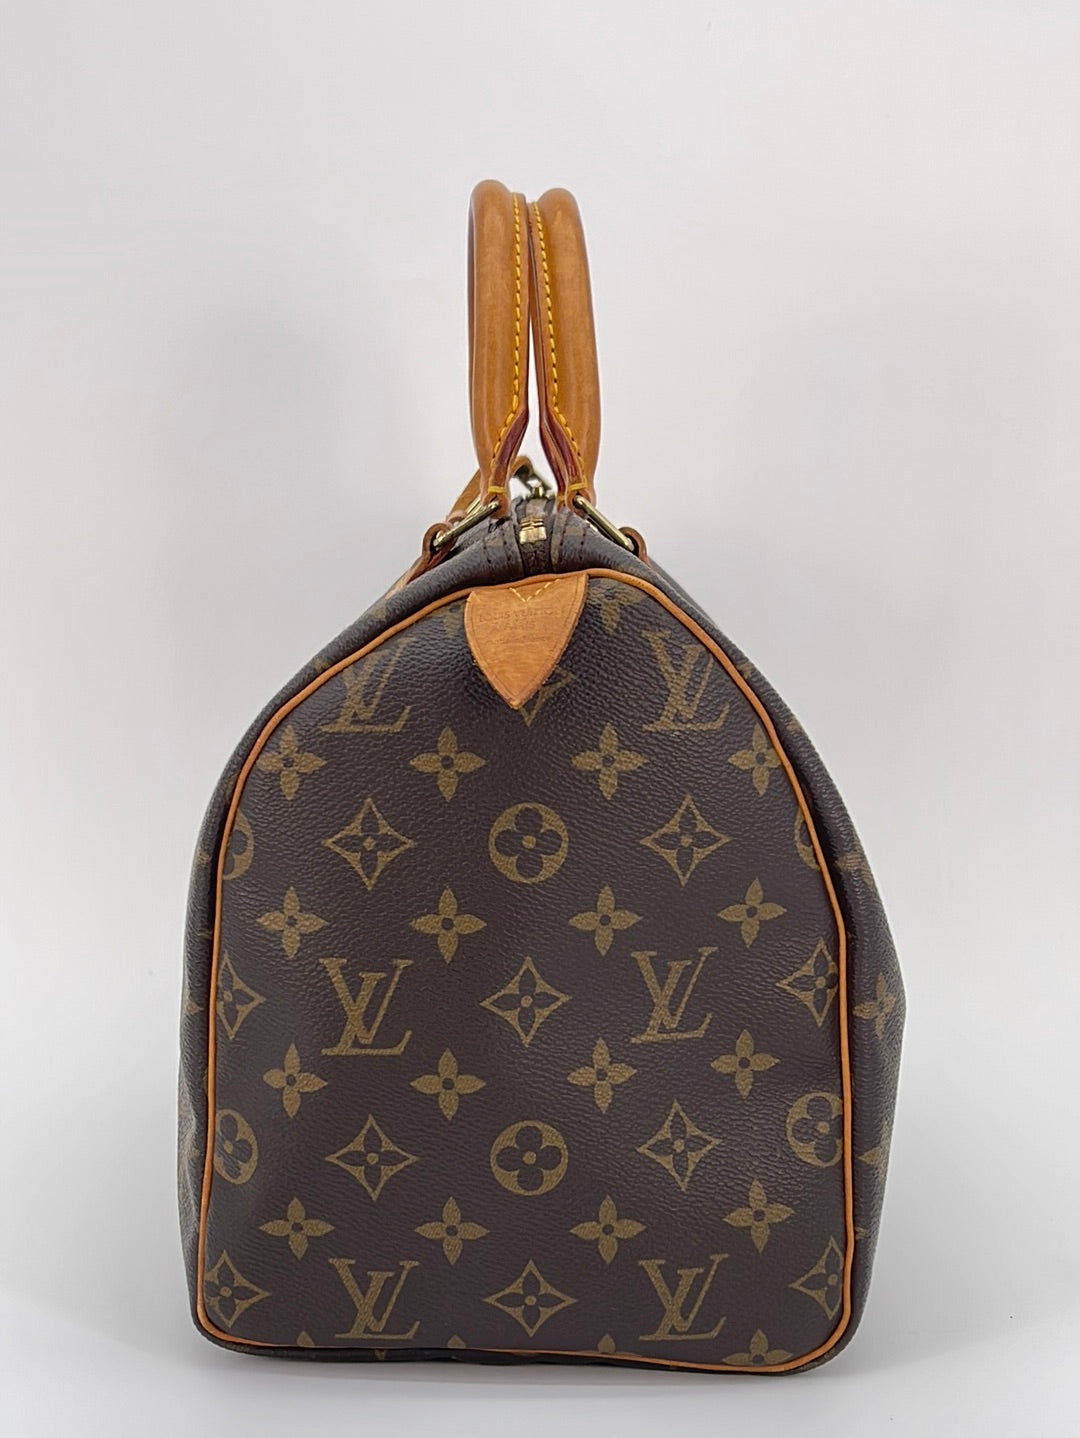 Authentic Louis Vuitton Monogram Vintage 1999 Speedy 30 Bag Restored!